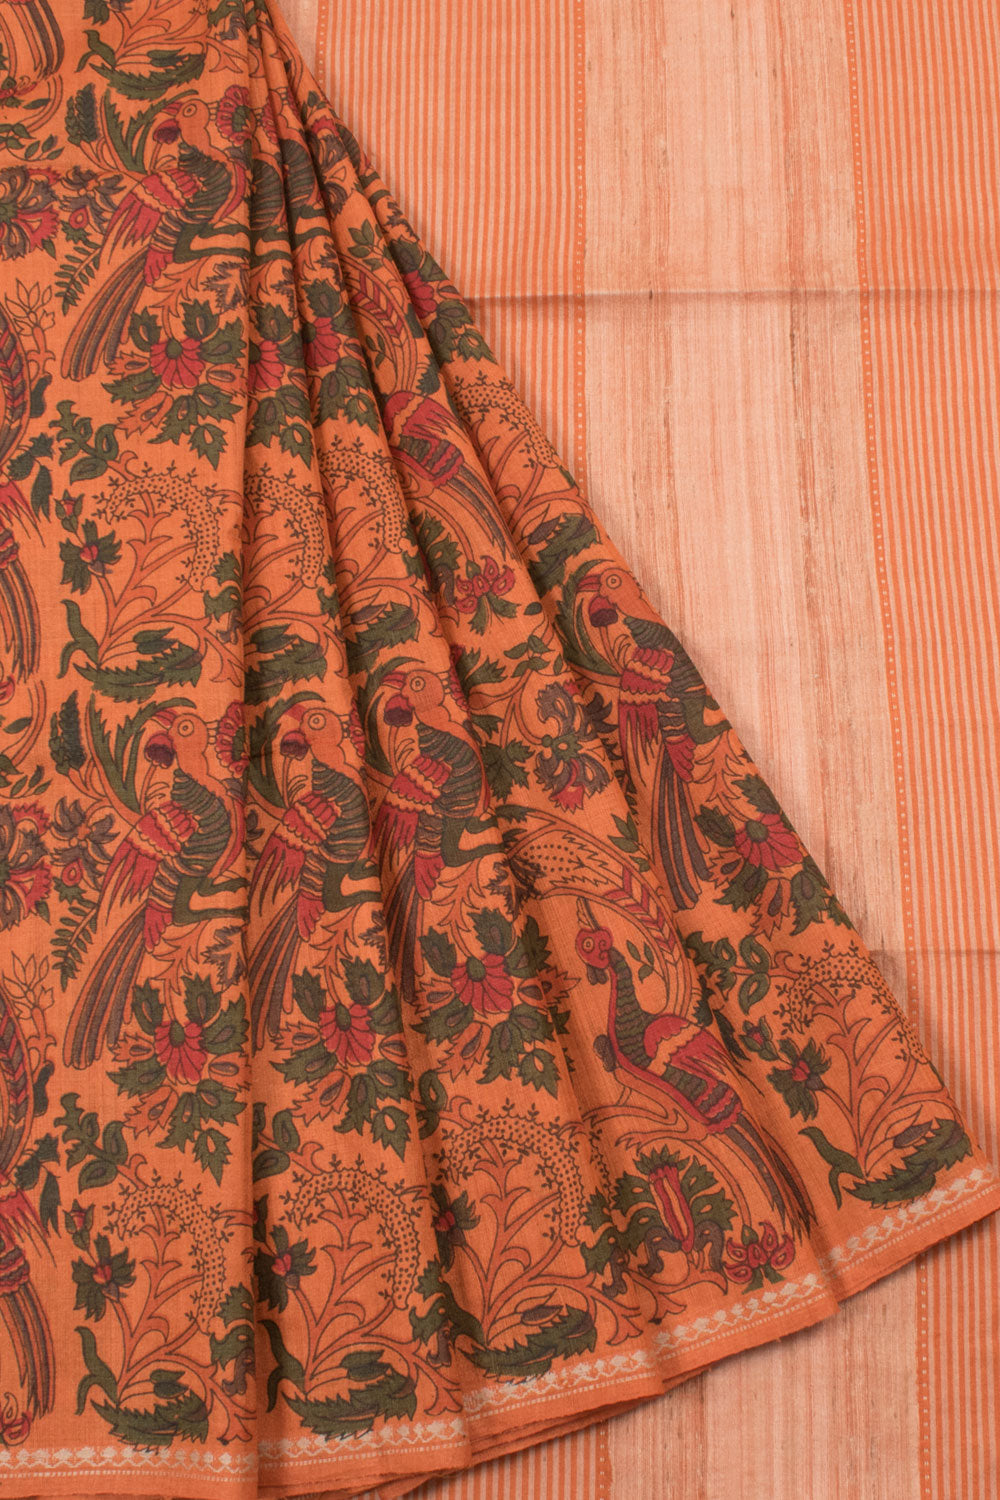 Printed Maheshwari Tussar Cotton Saree with Floral and Bird Motifs